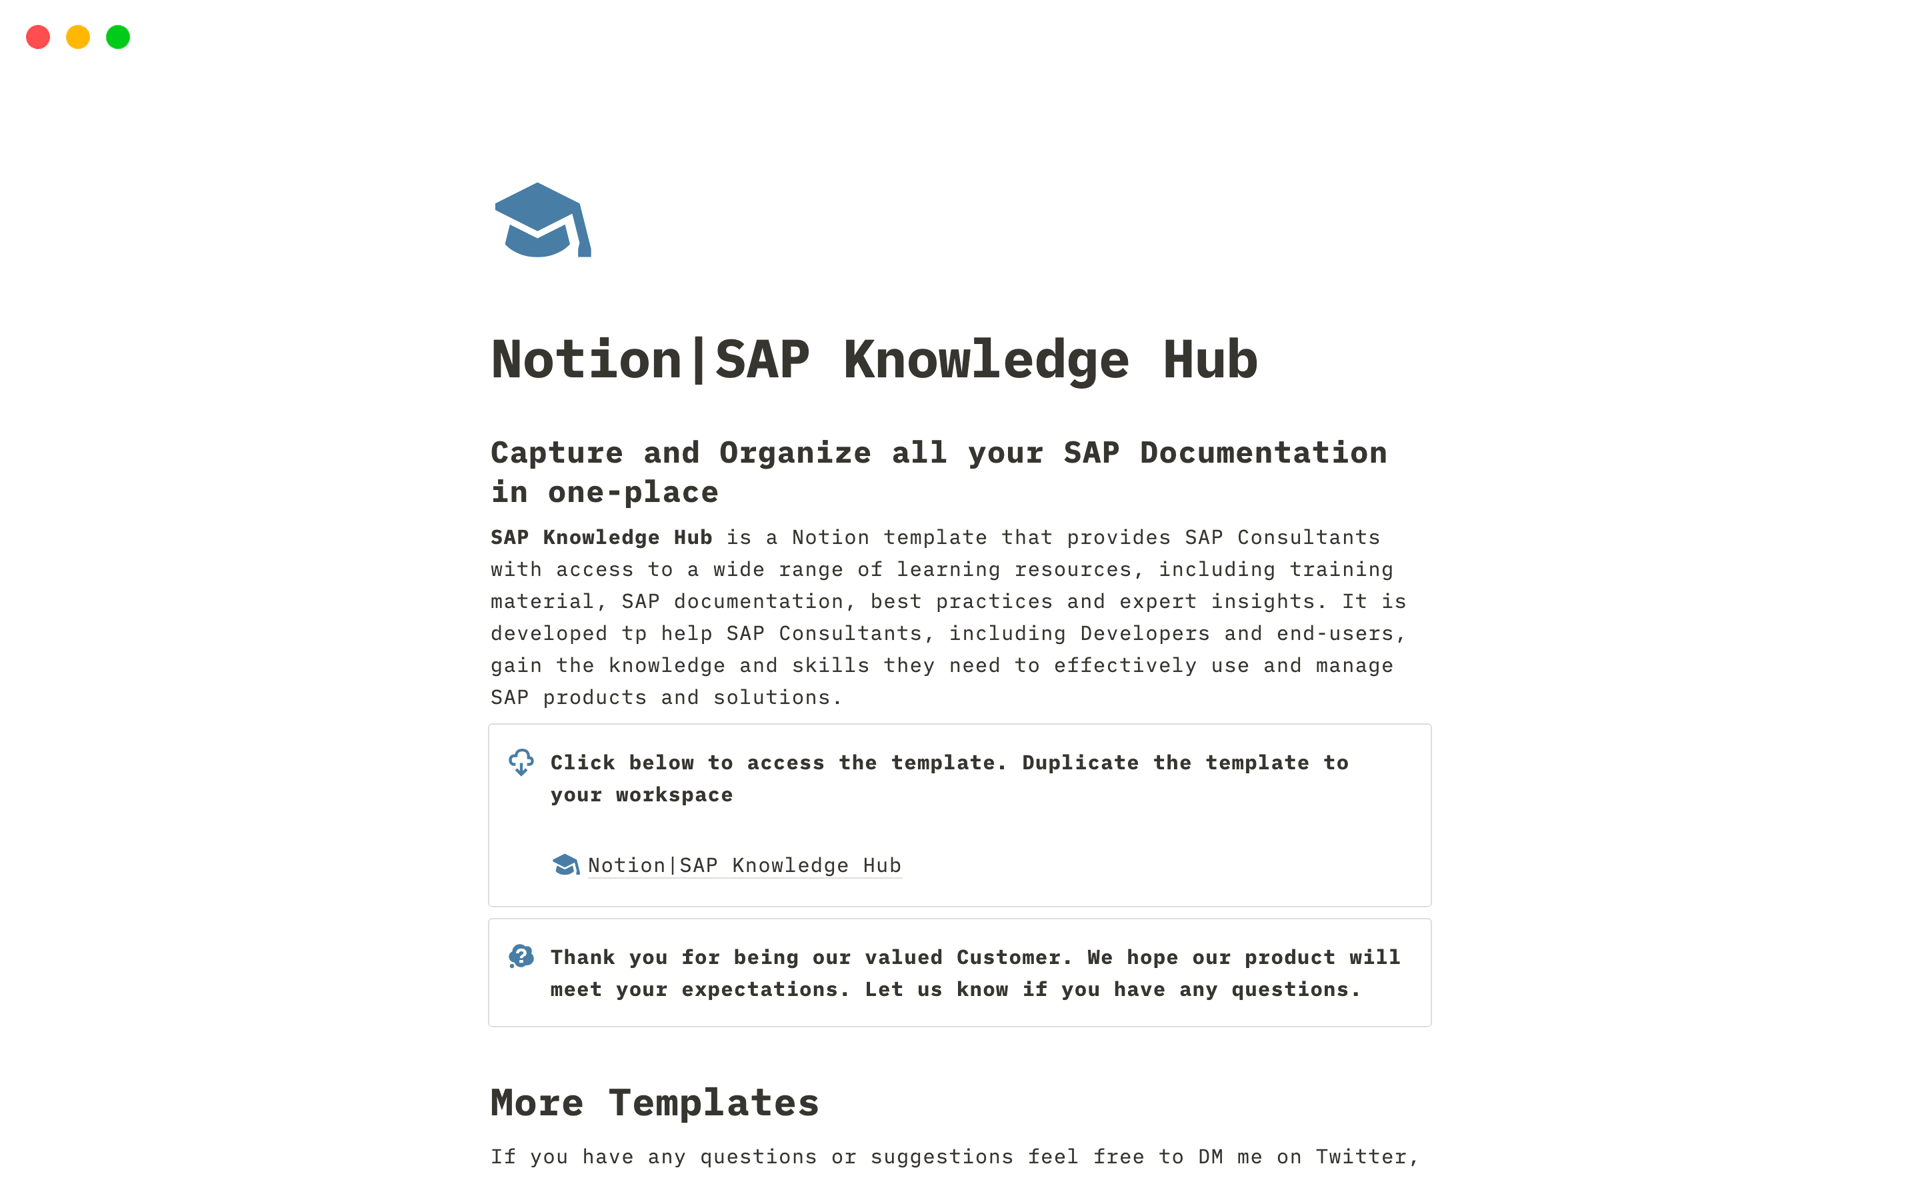 Aperçu du modèle de SAP Knowledge Hub